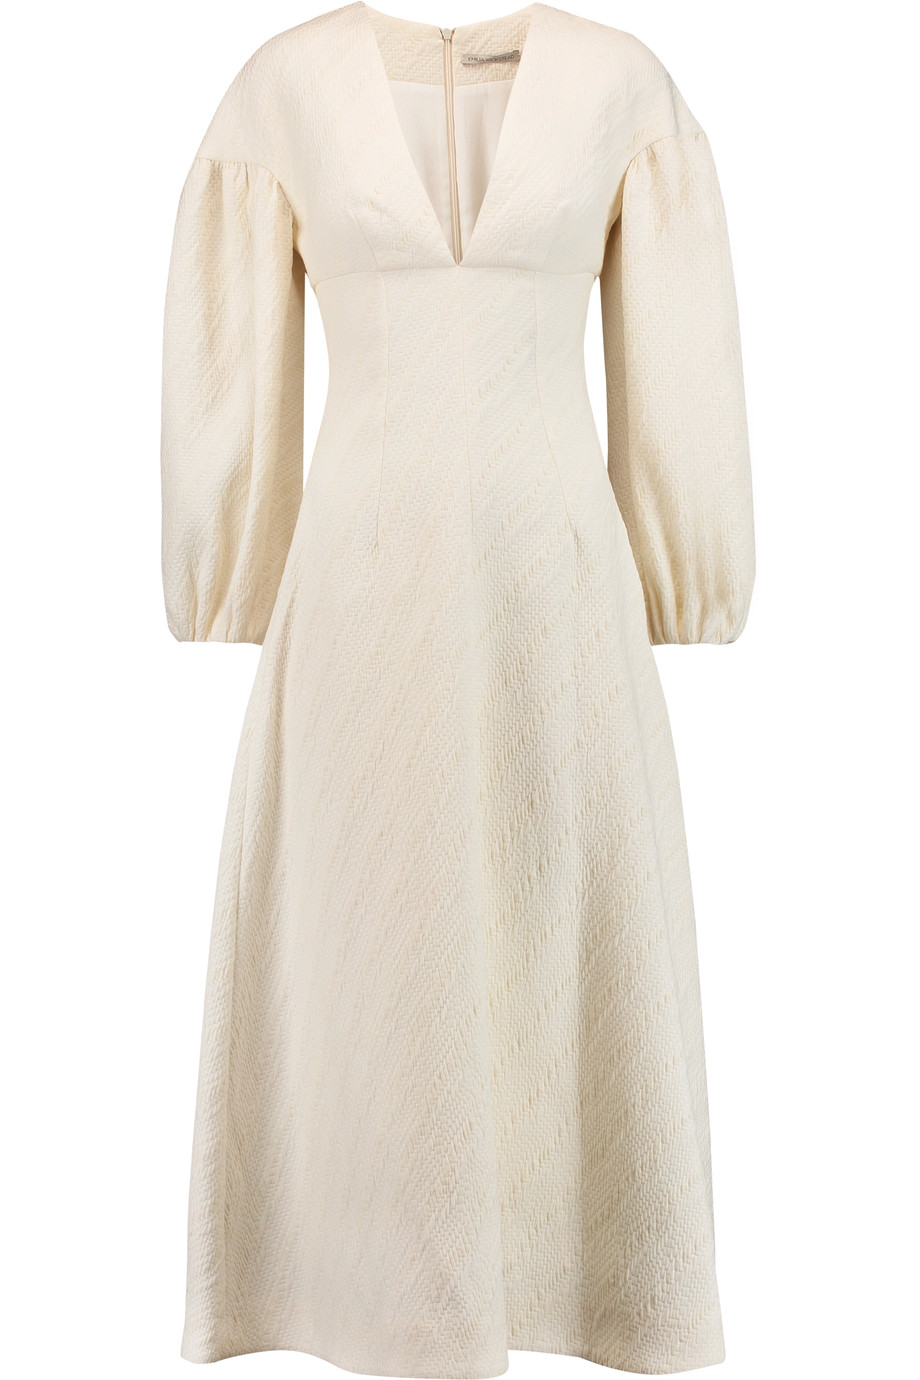 Emilia Wickstead Martha Jacquard Midi Dress | ModeSens